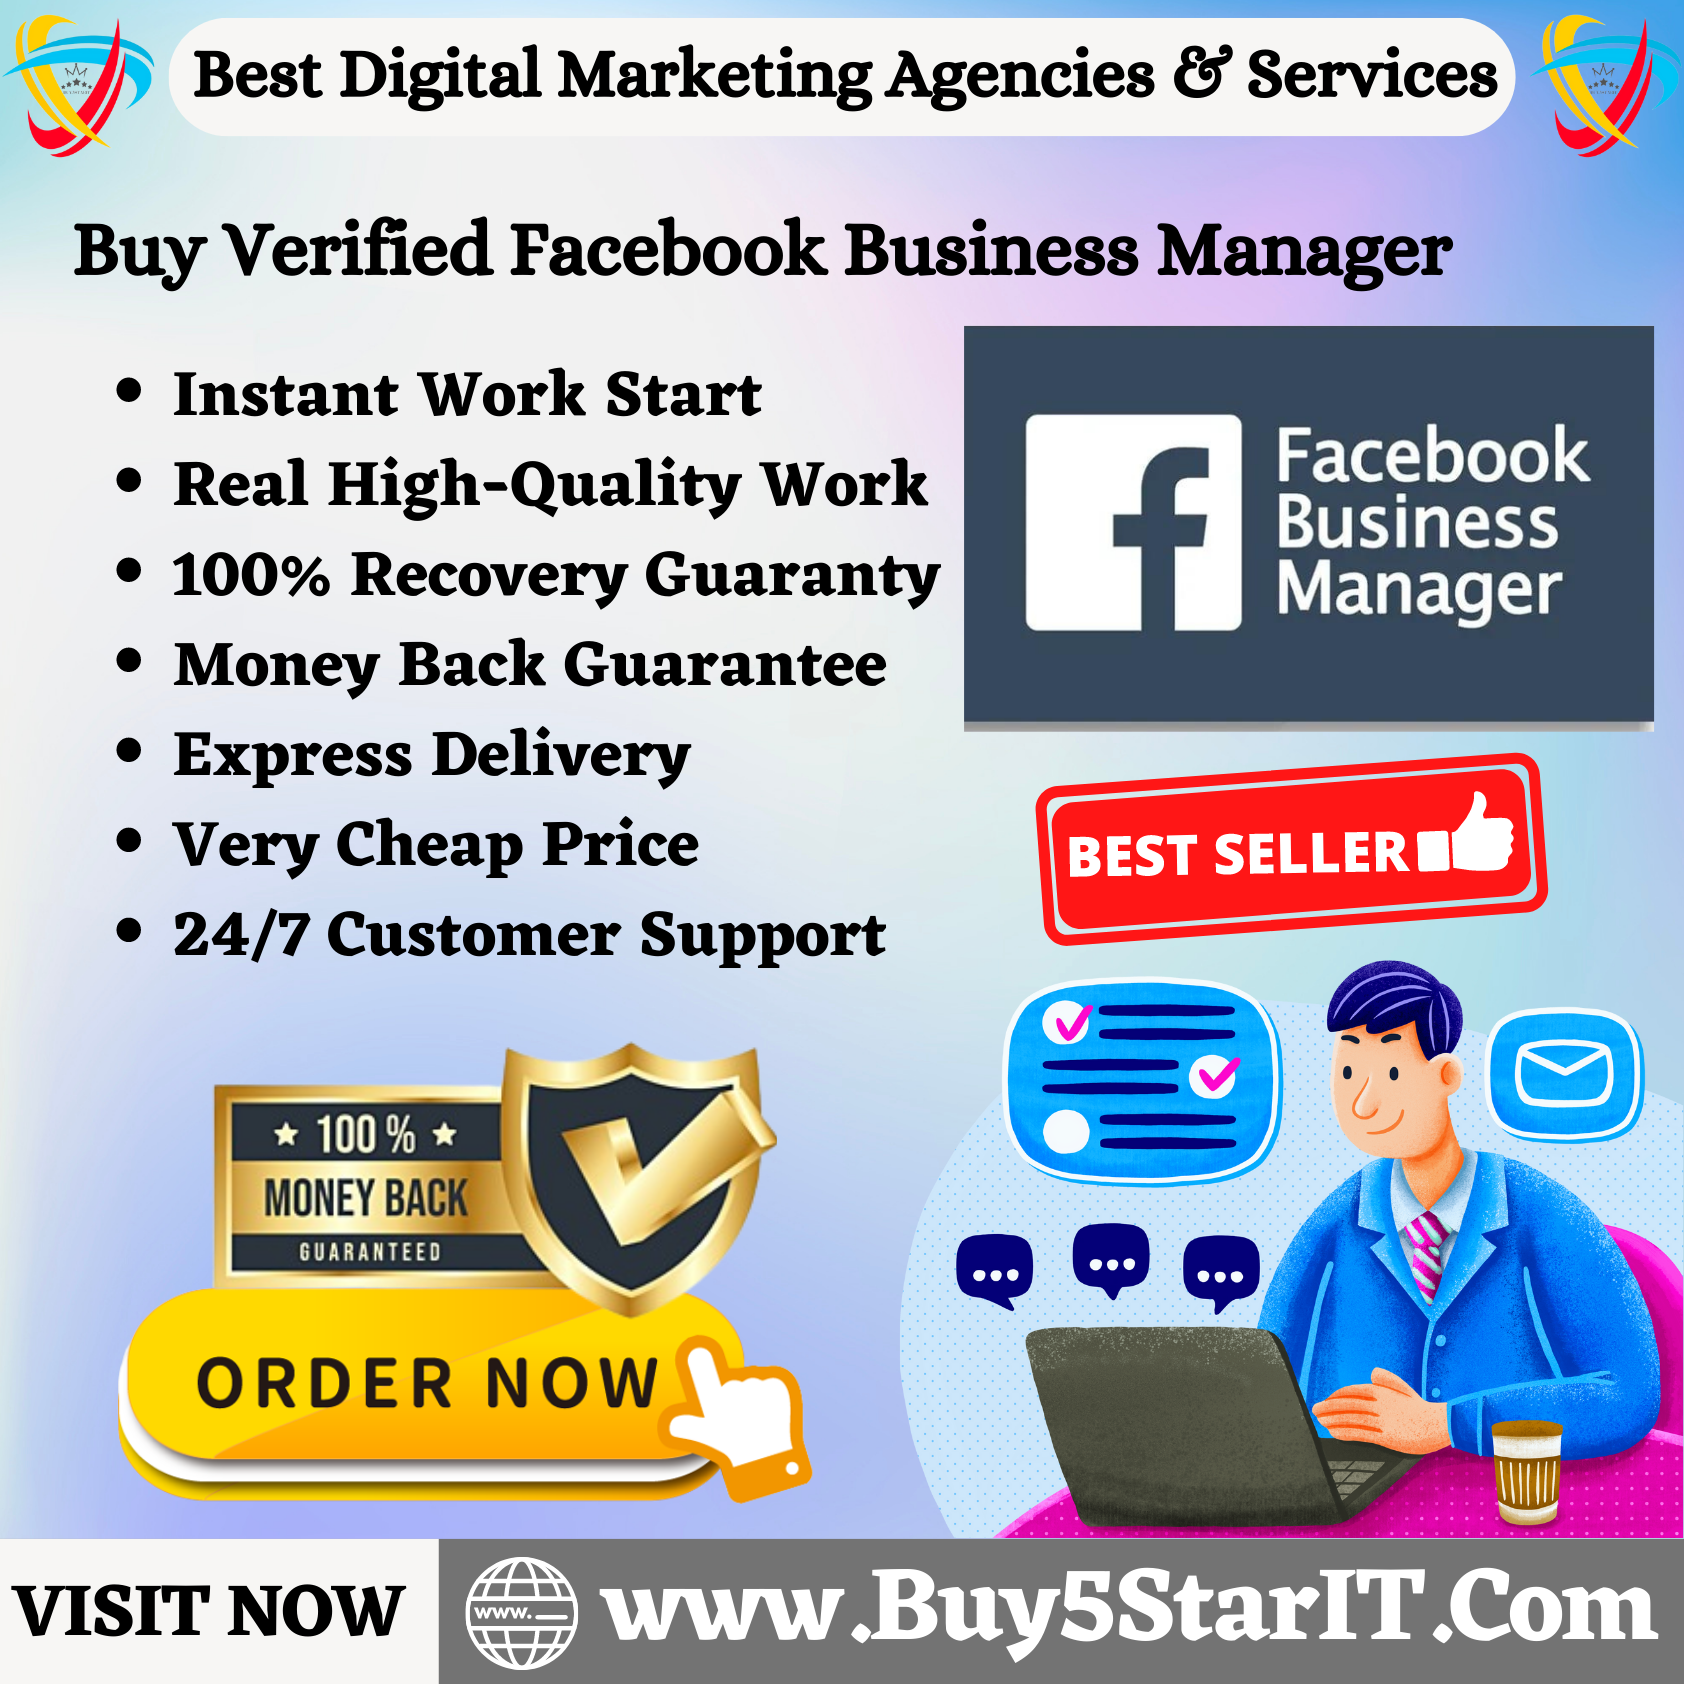 Buy Verified Facebook Business Manager - 100% Cheap Verified BM Seller